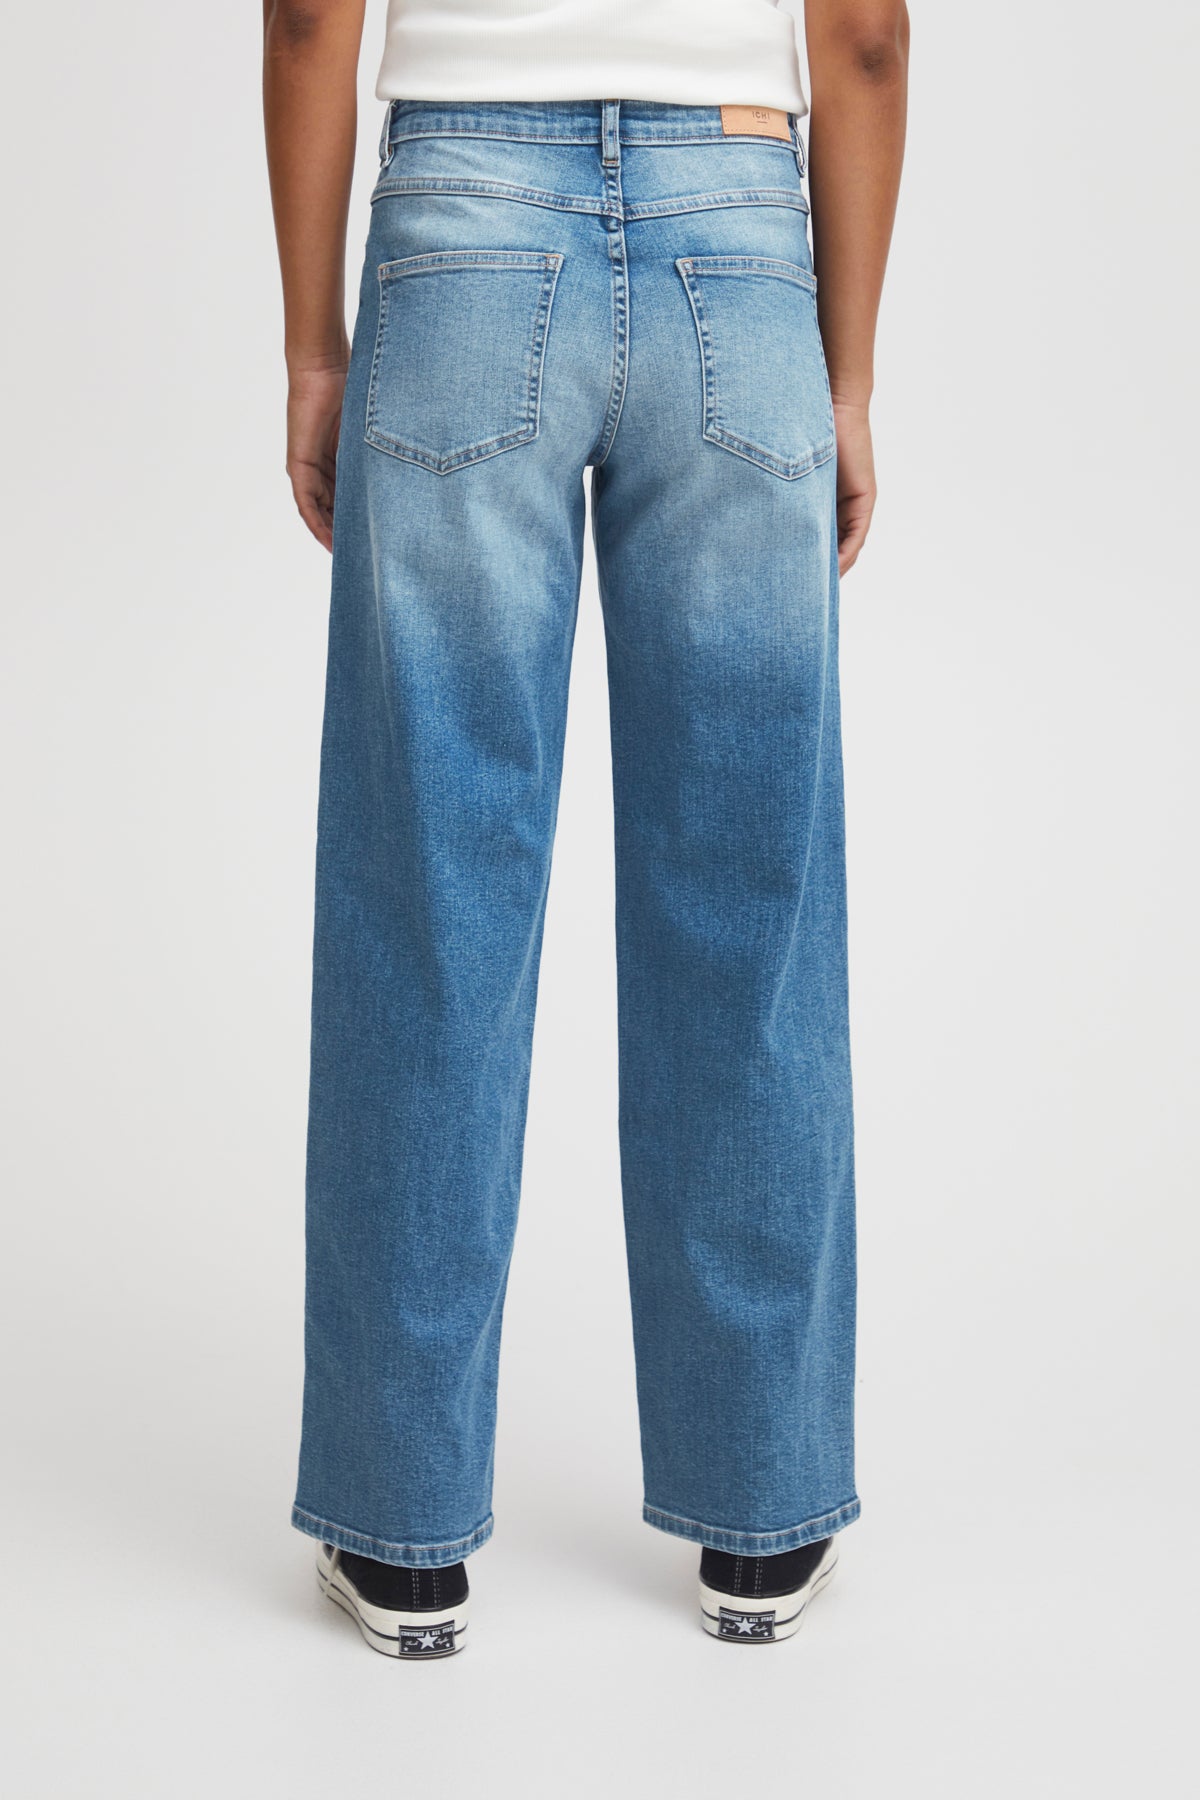 Jeans Twiggy straight long, light blue